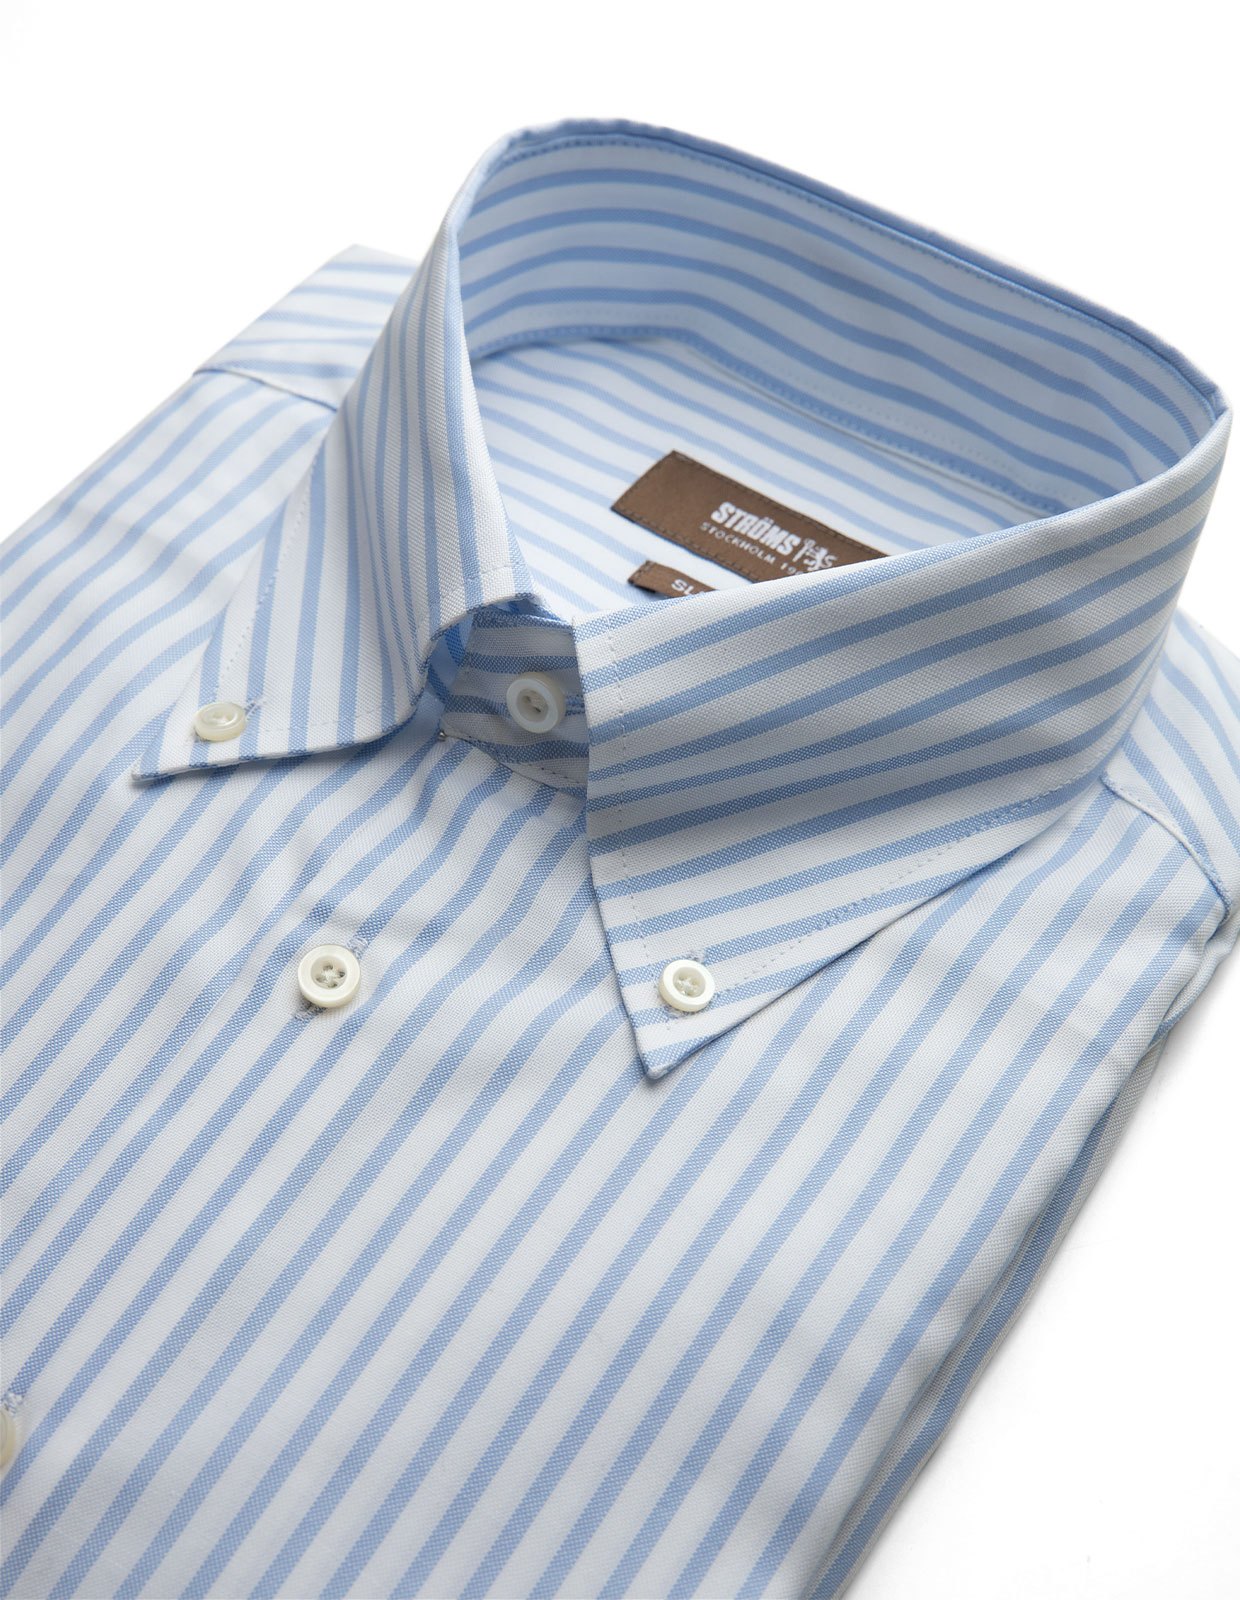 Slim Fit Button Down Summer Oxford Shirt White/Blue Stripe